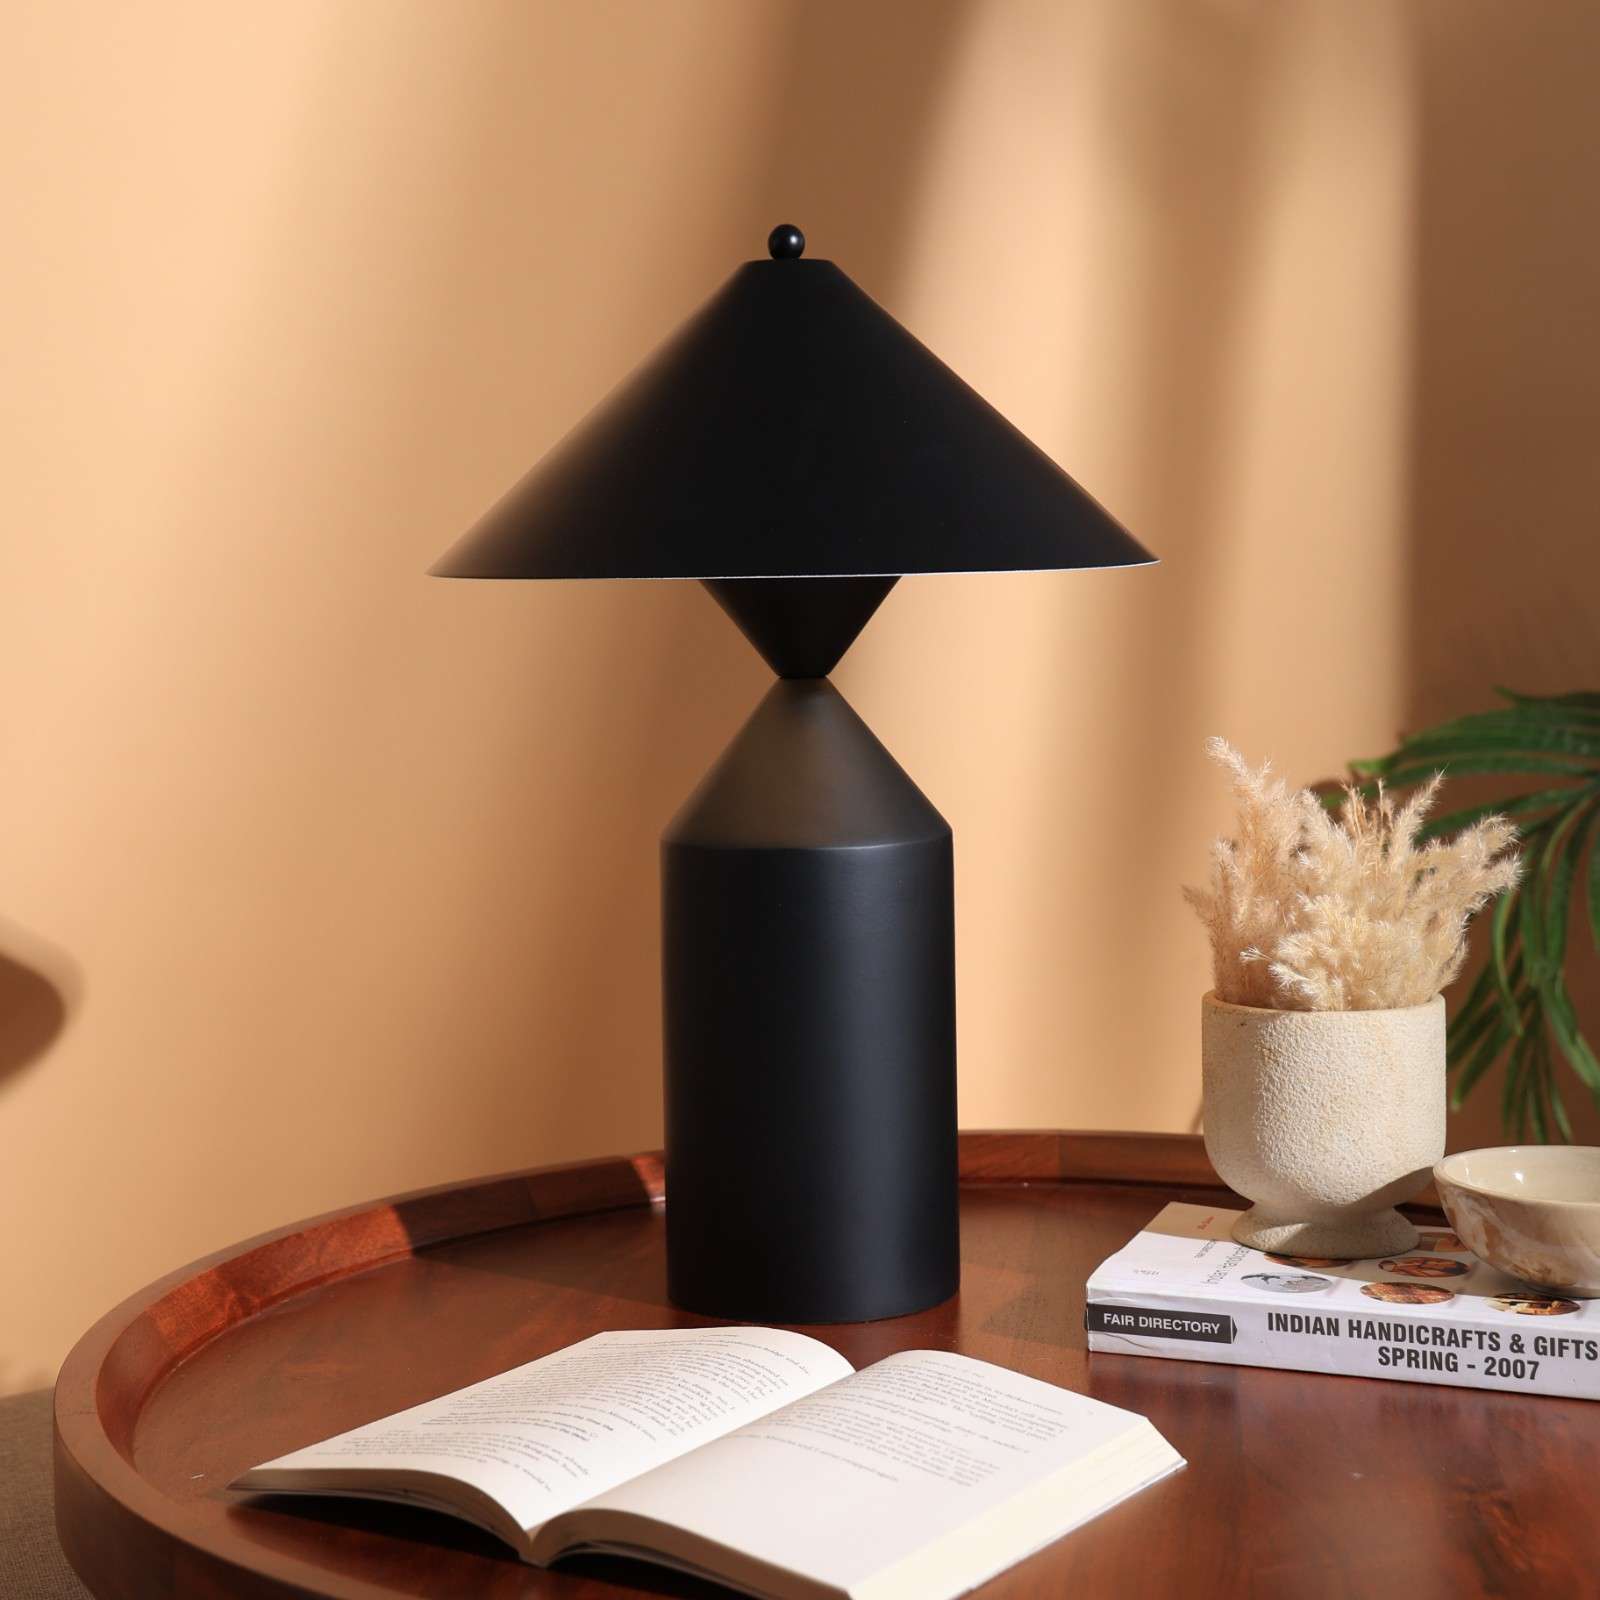 Cone Casa - Table Lamp - Modern Scandinavian Design, Premium Metallic Finish, Easy Installation